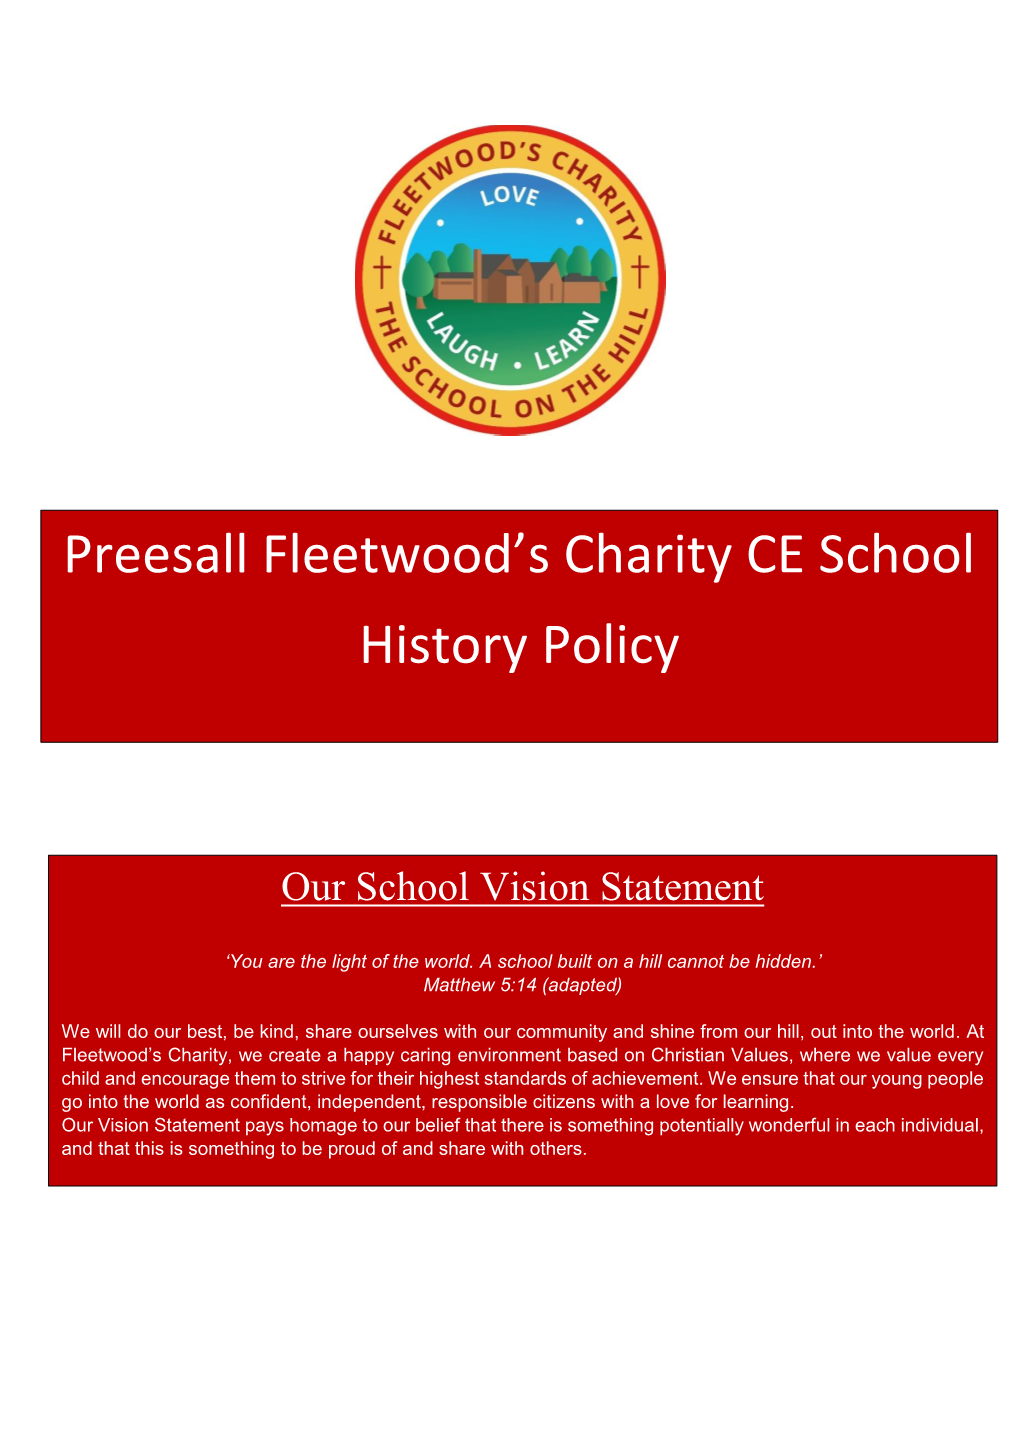 Preesall Fleetwood's Charity CE School History Policy